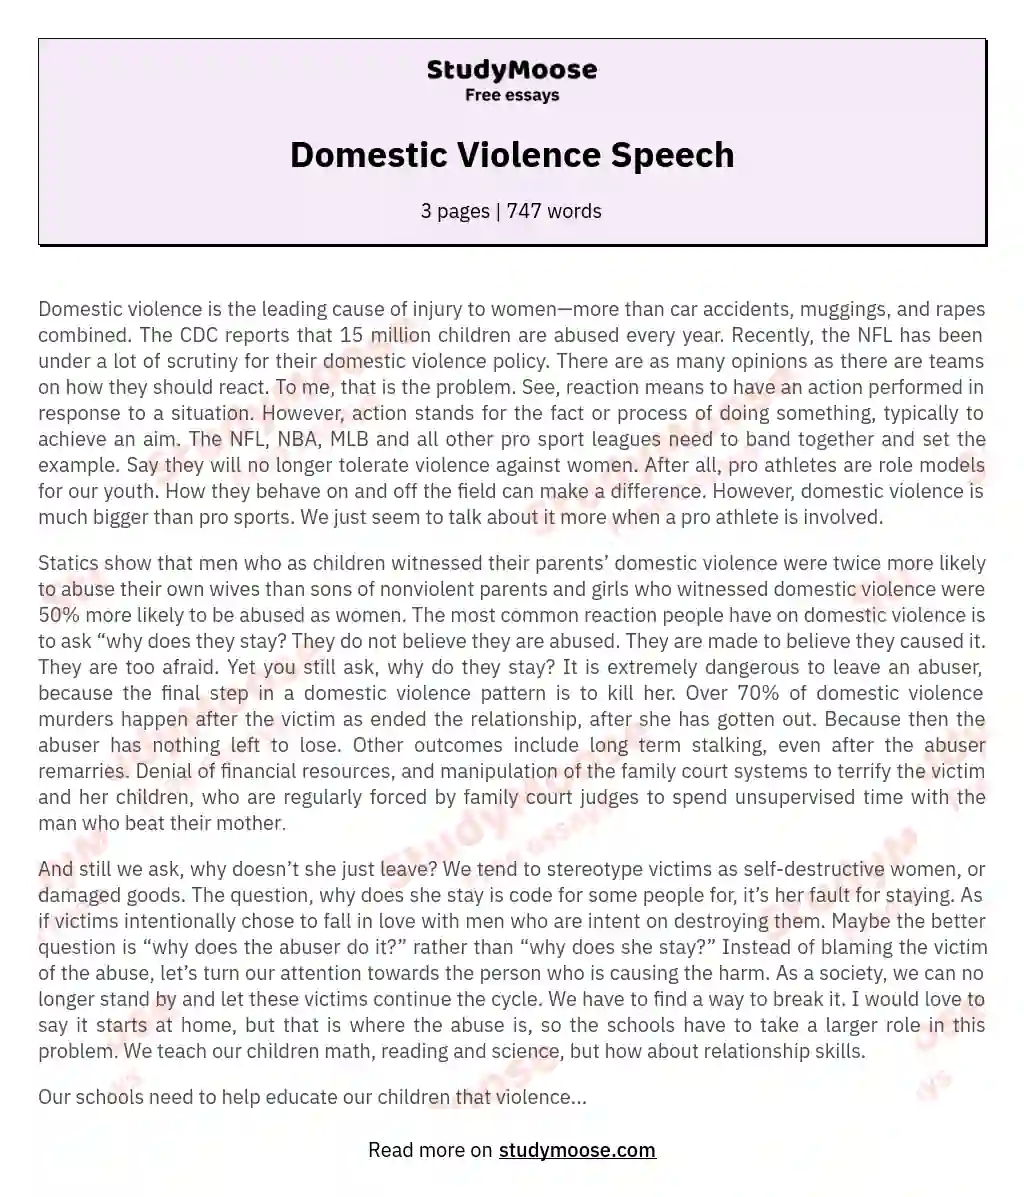 Domestic Violence Speech essay